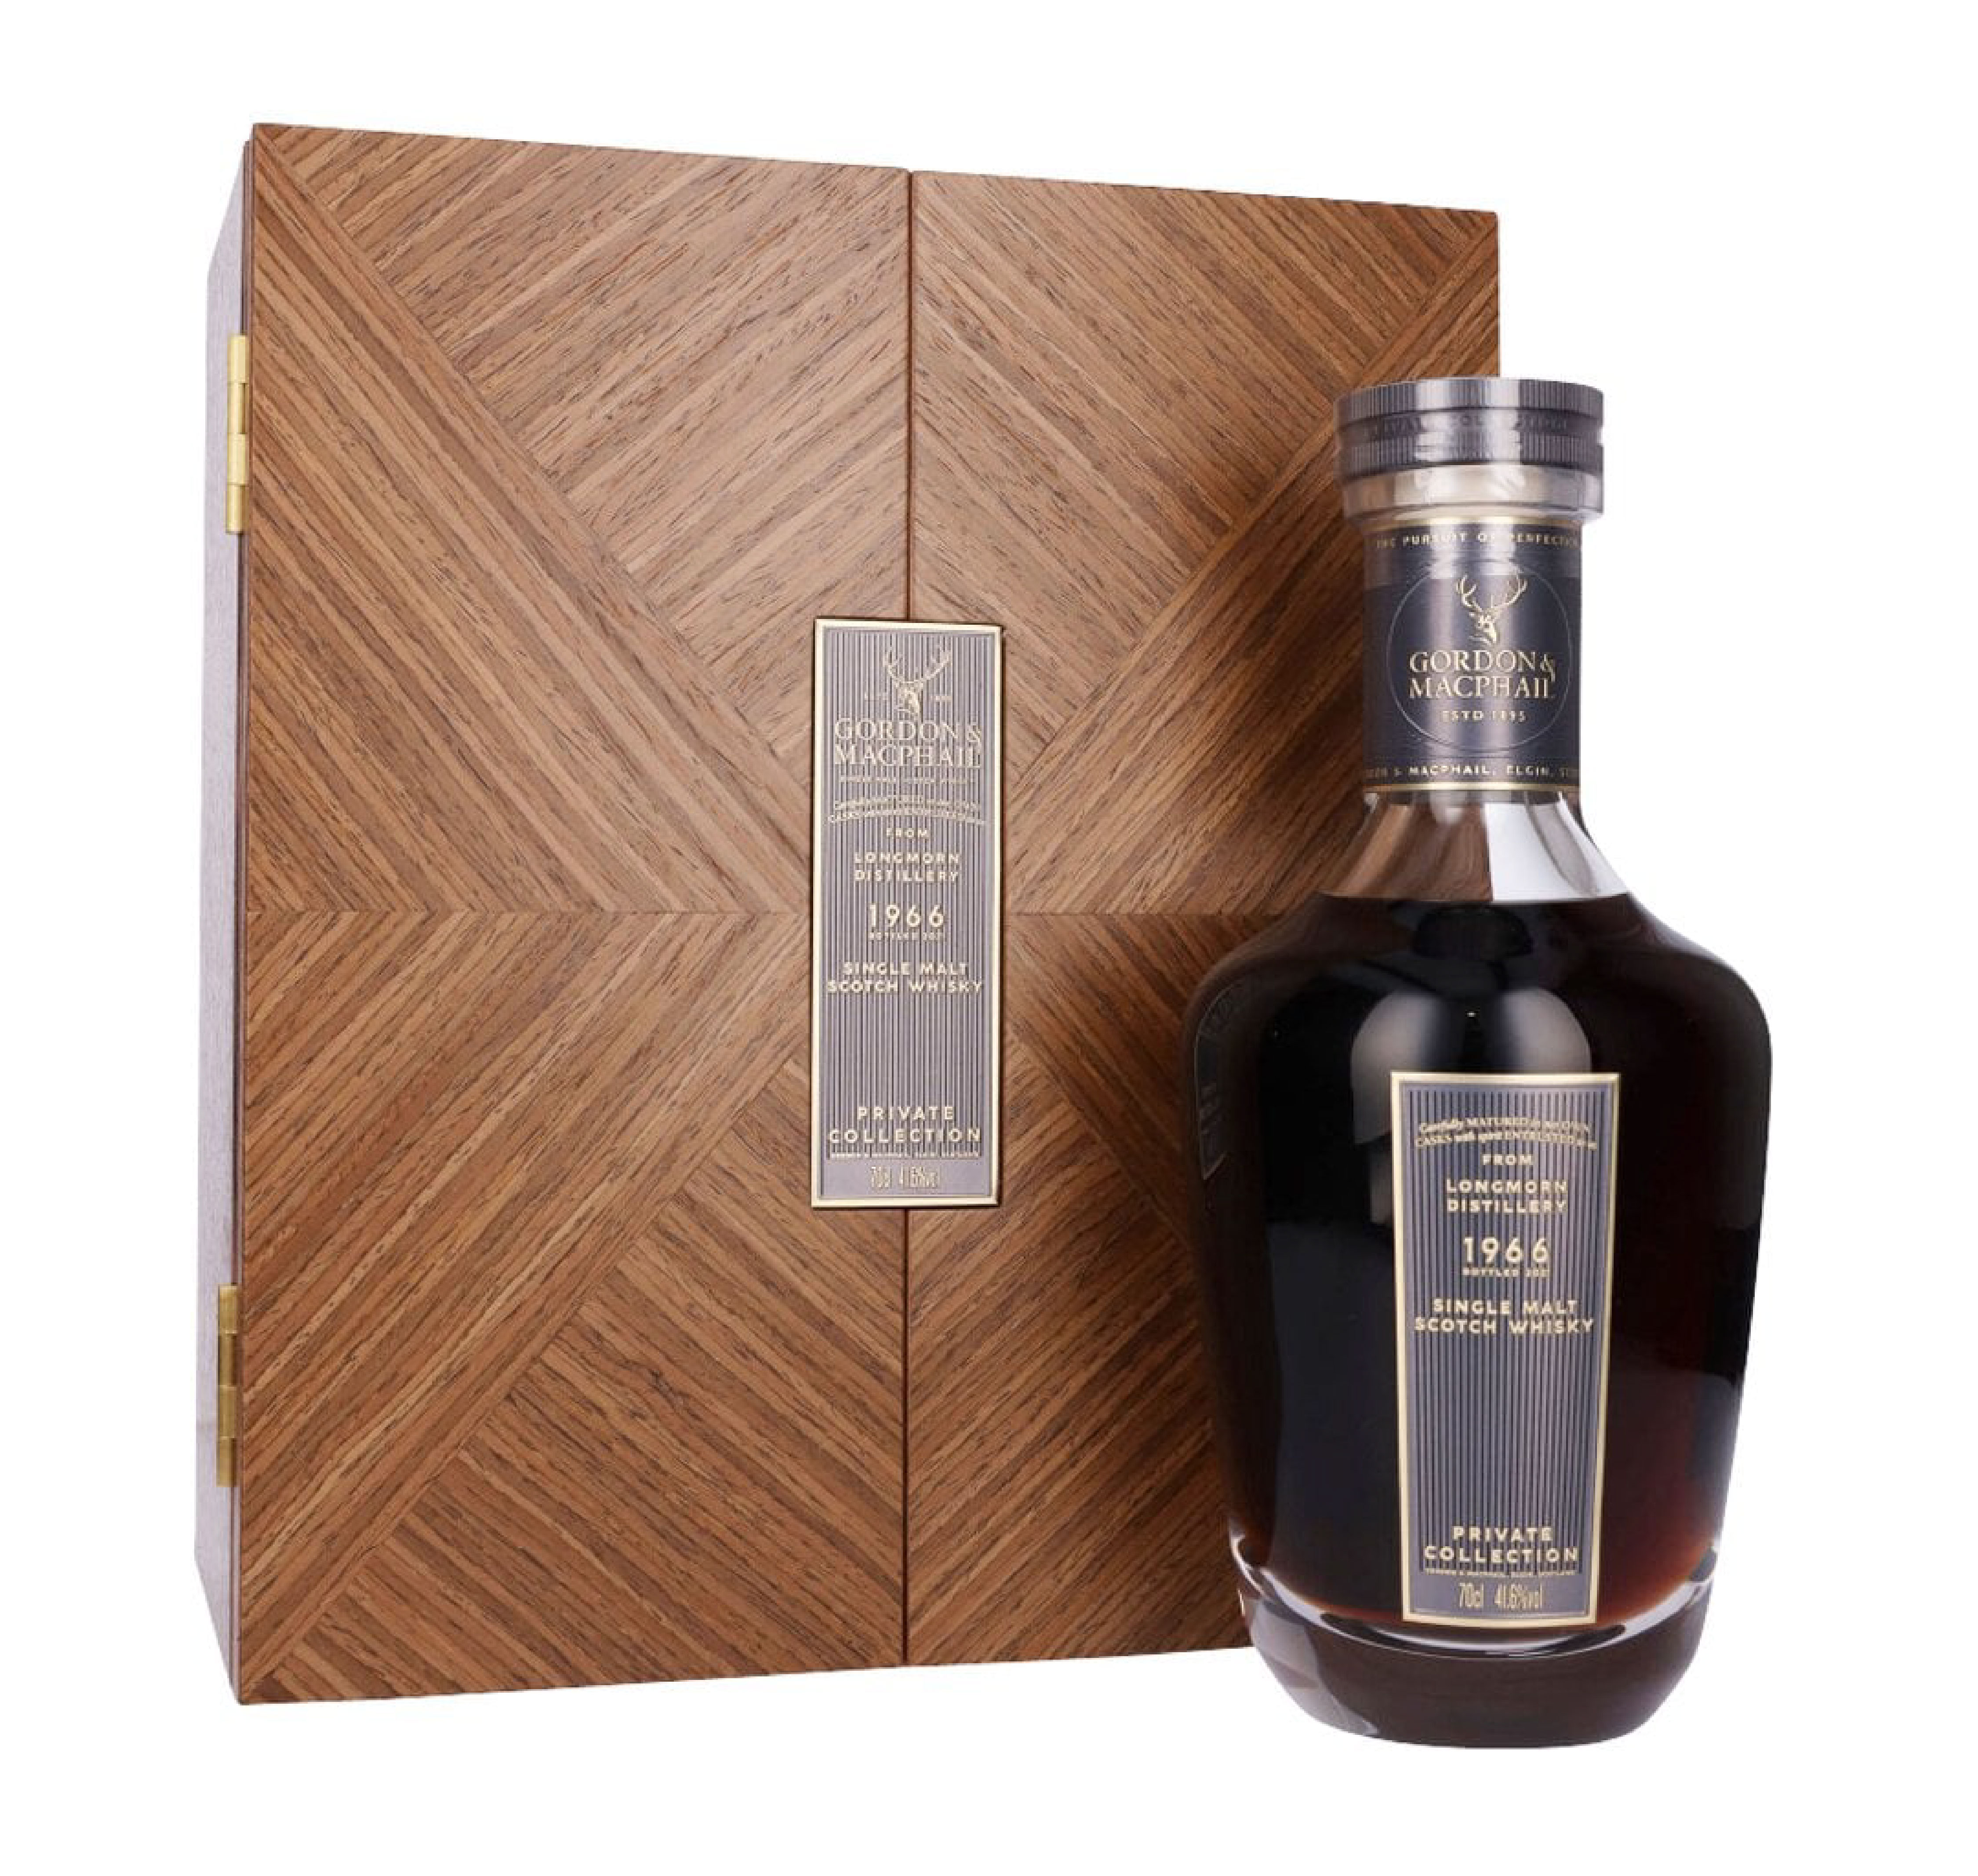 Gordon & MacPhail Private Collection Longmorn Single Malt Scotch Whisky 1966